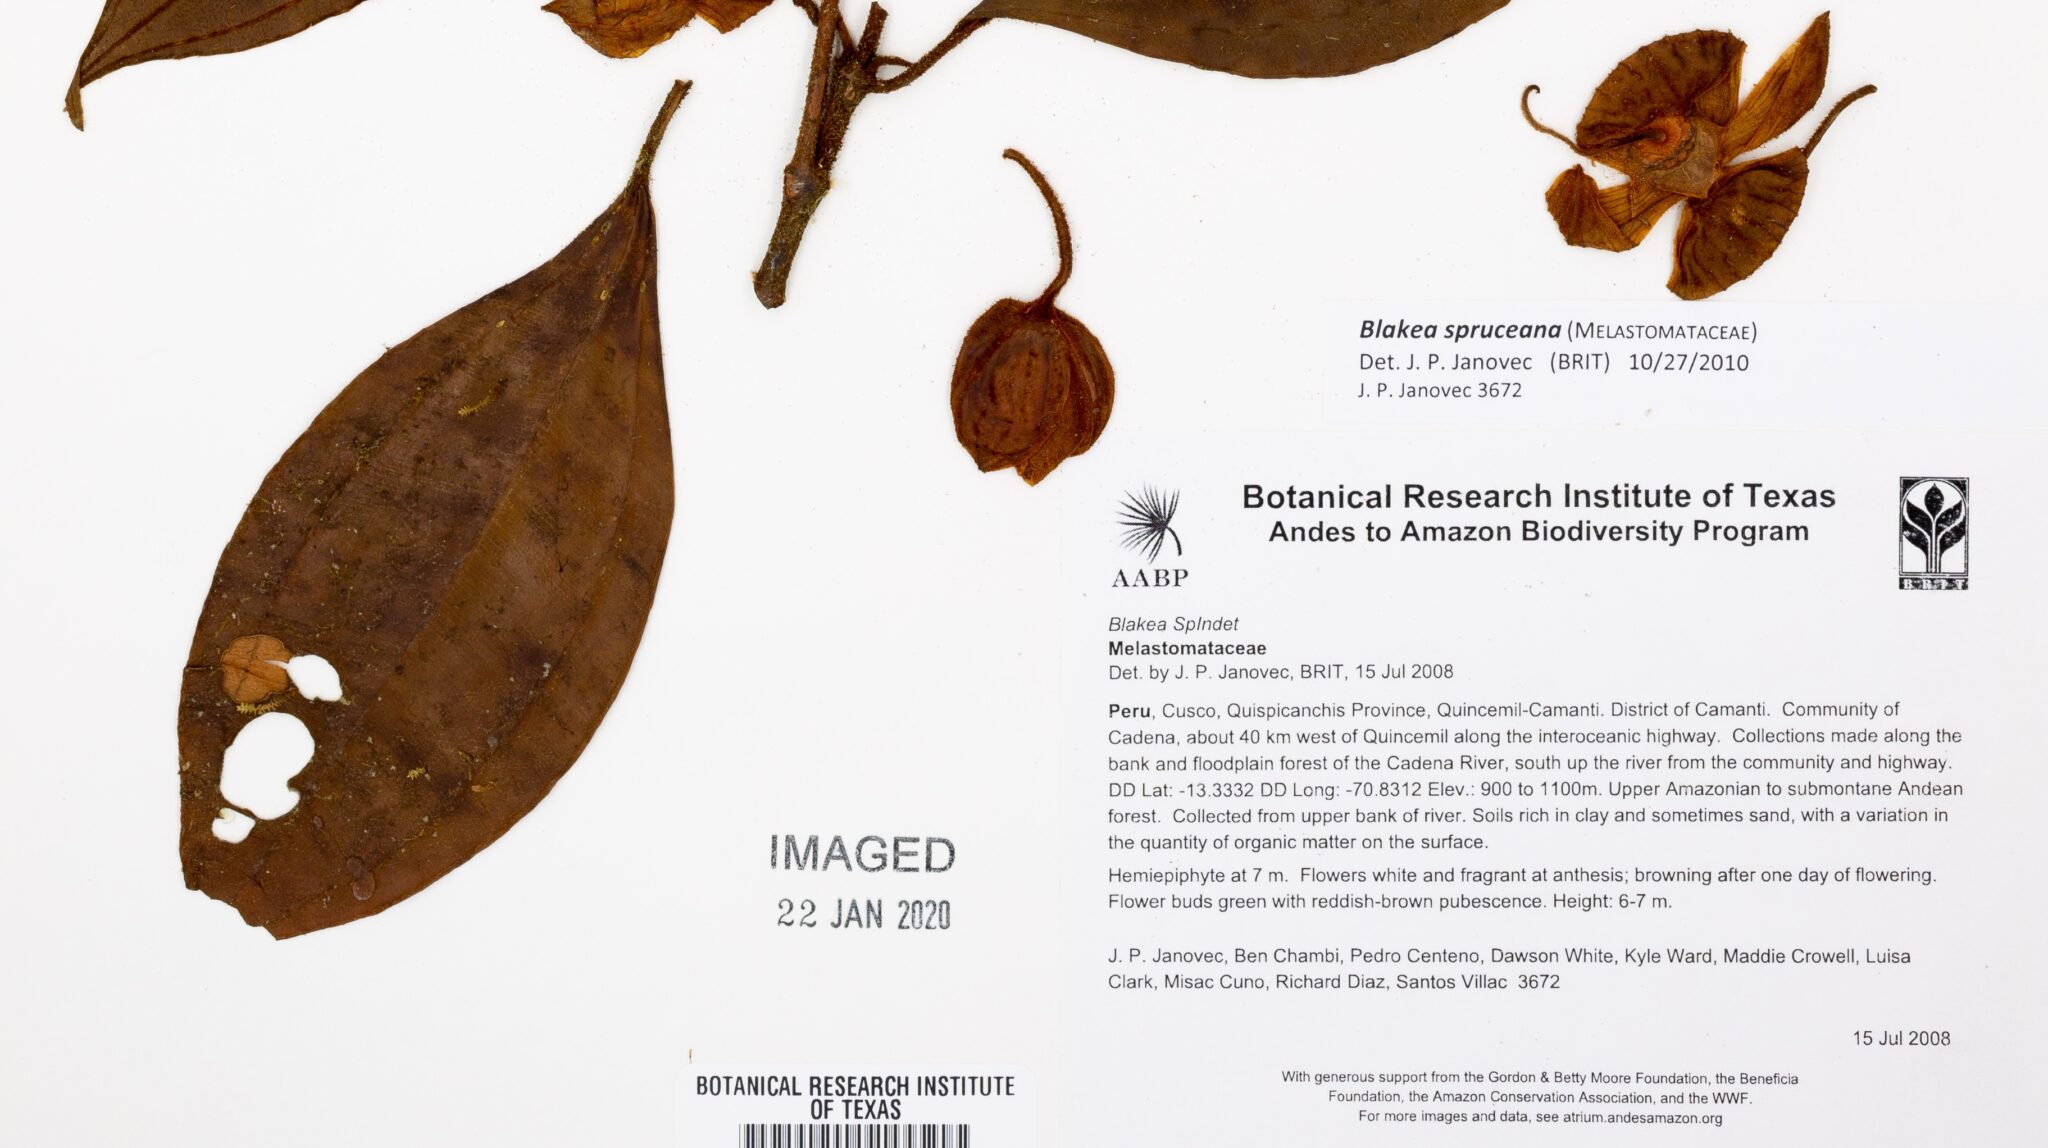 Herbarium specimen from AABP project - Blakea spindet